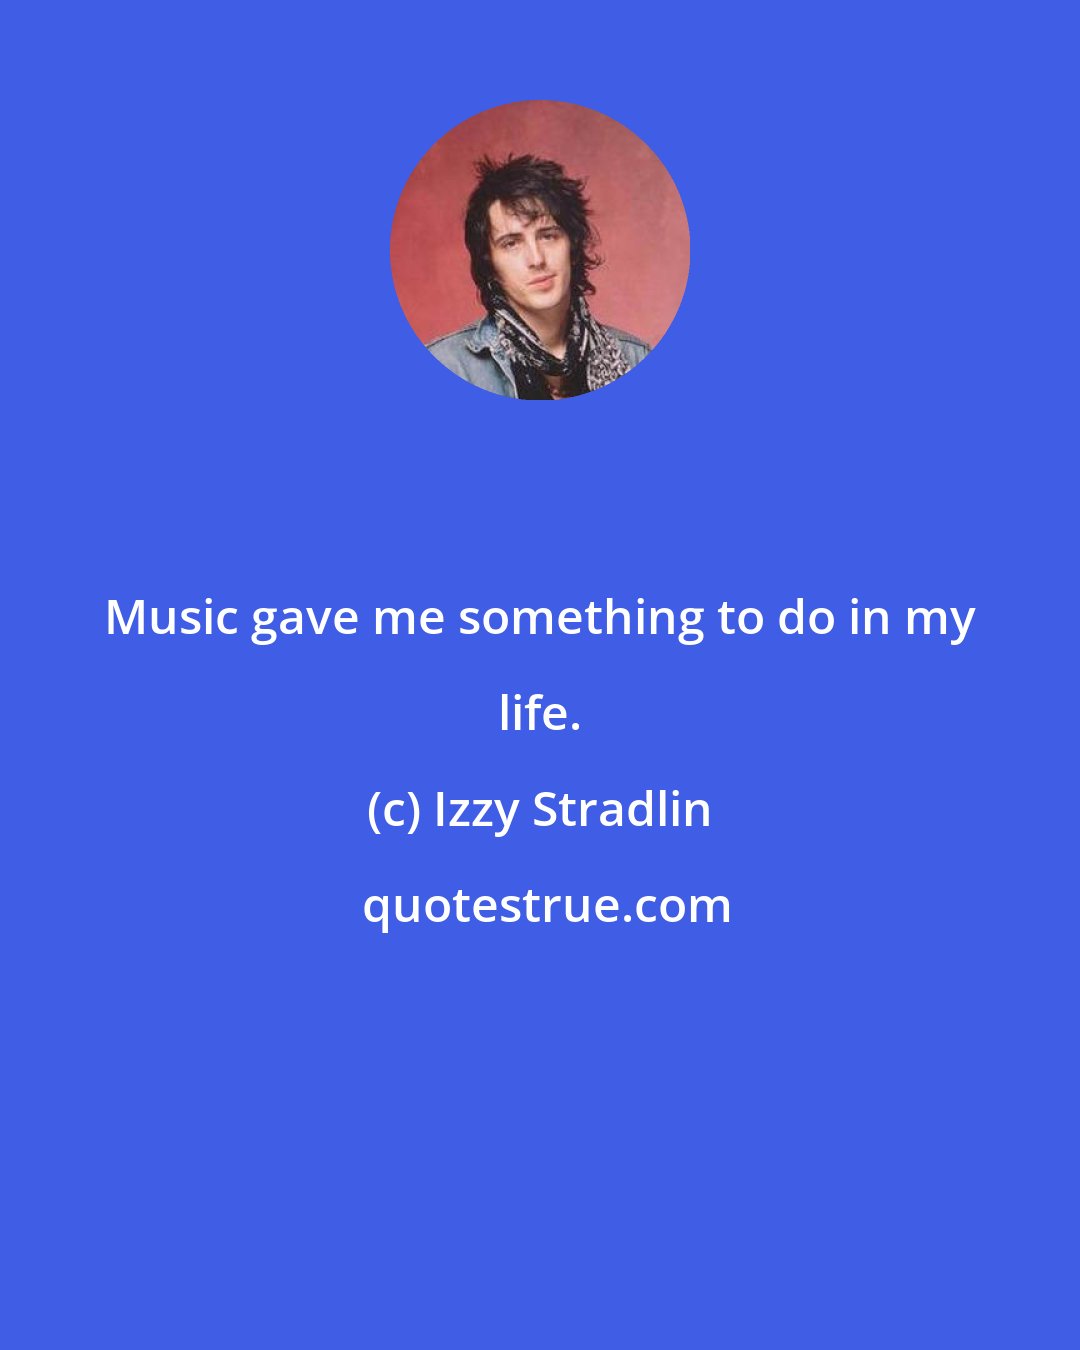 Izzy Stradlin: Music gave me something to do in my life.